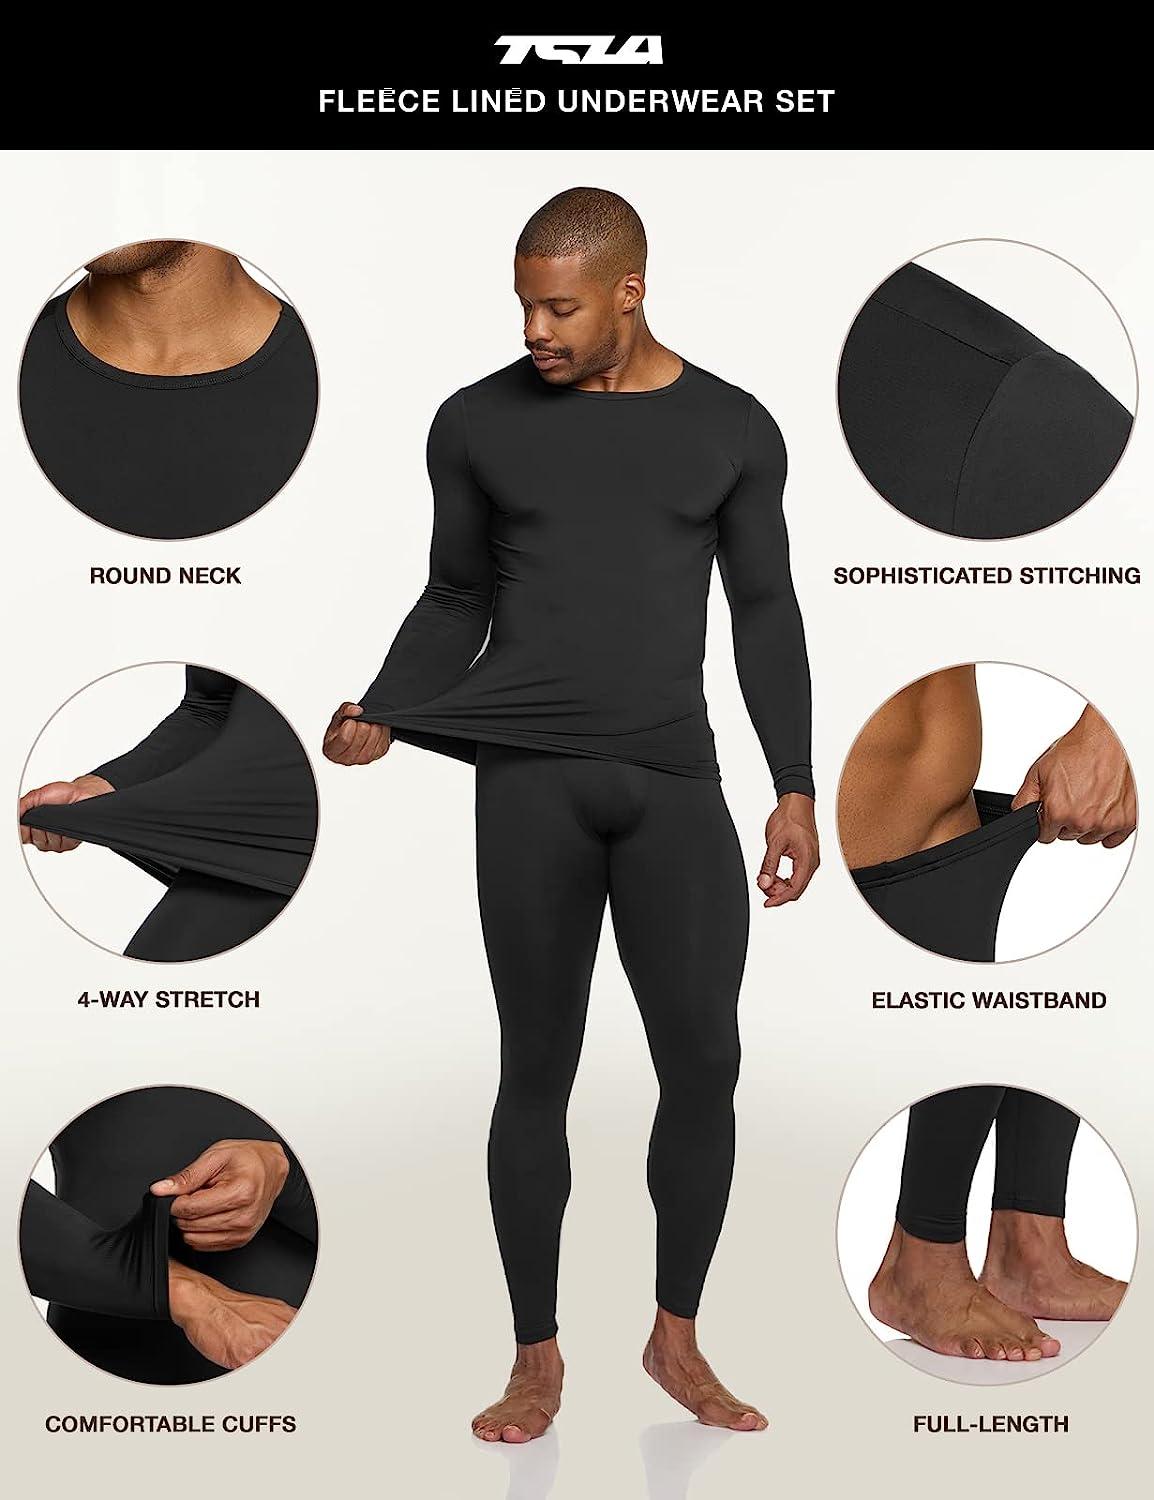 Men's Thermal Underwear Set Fleece Top and Bottom Warm Long Johns